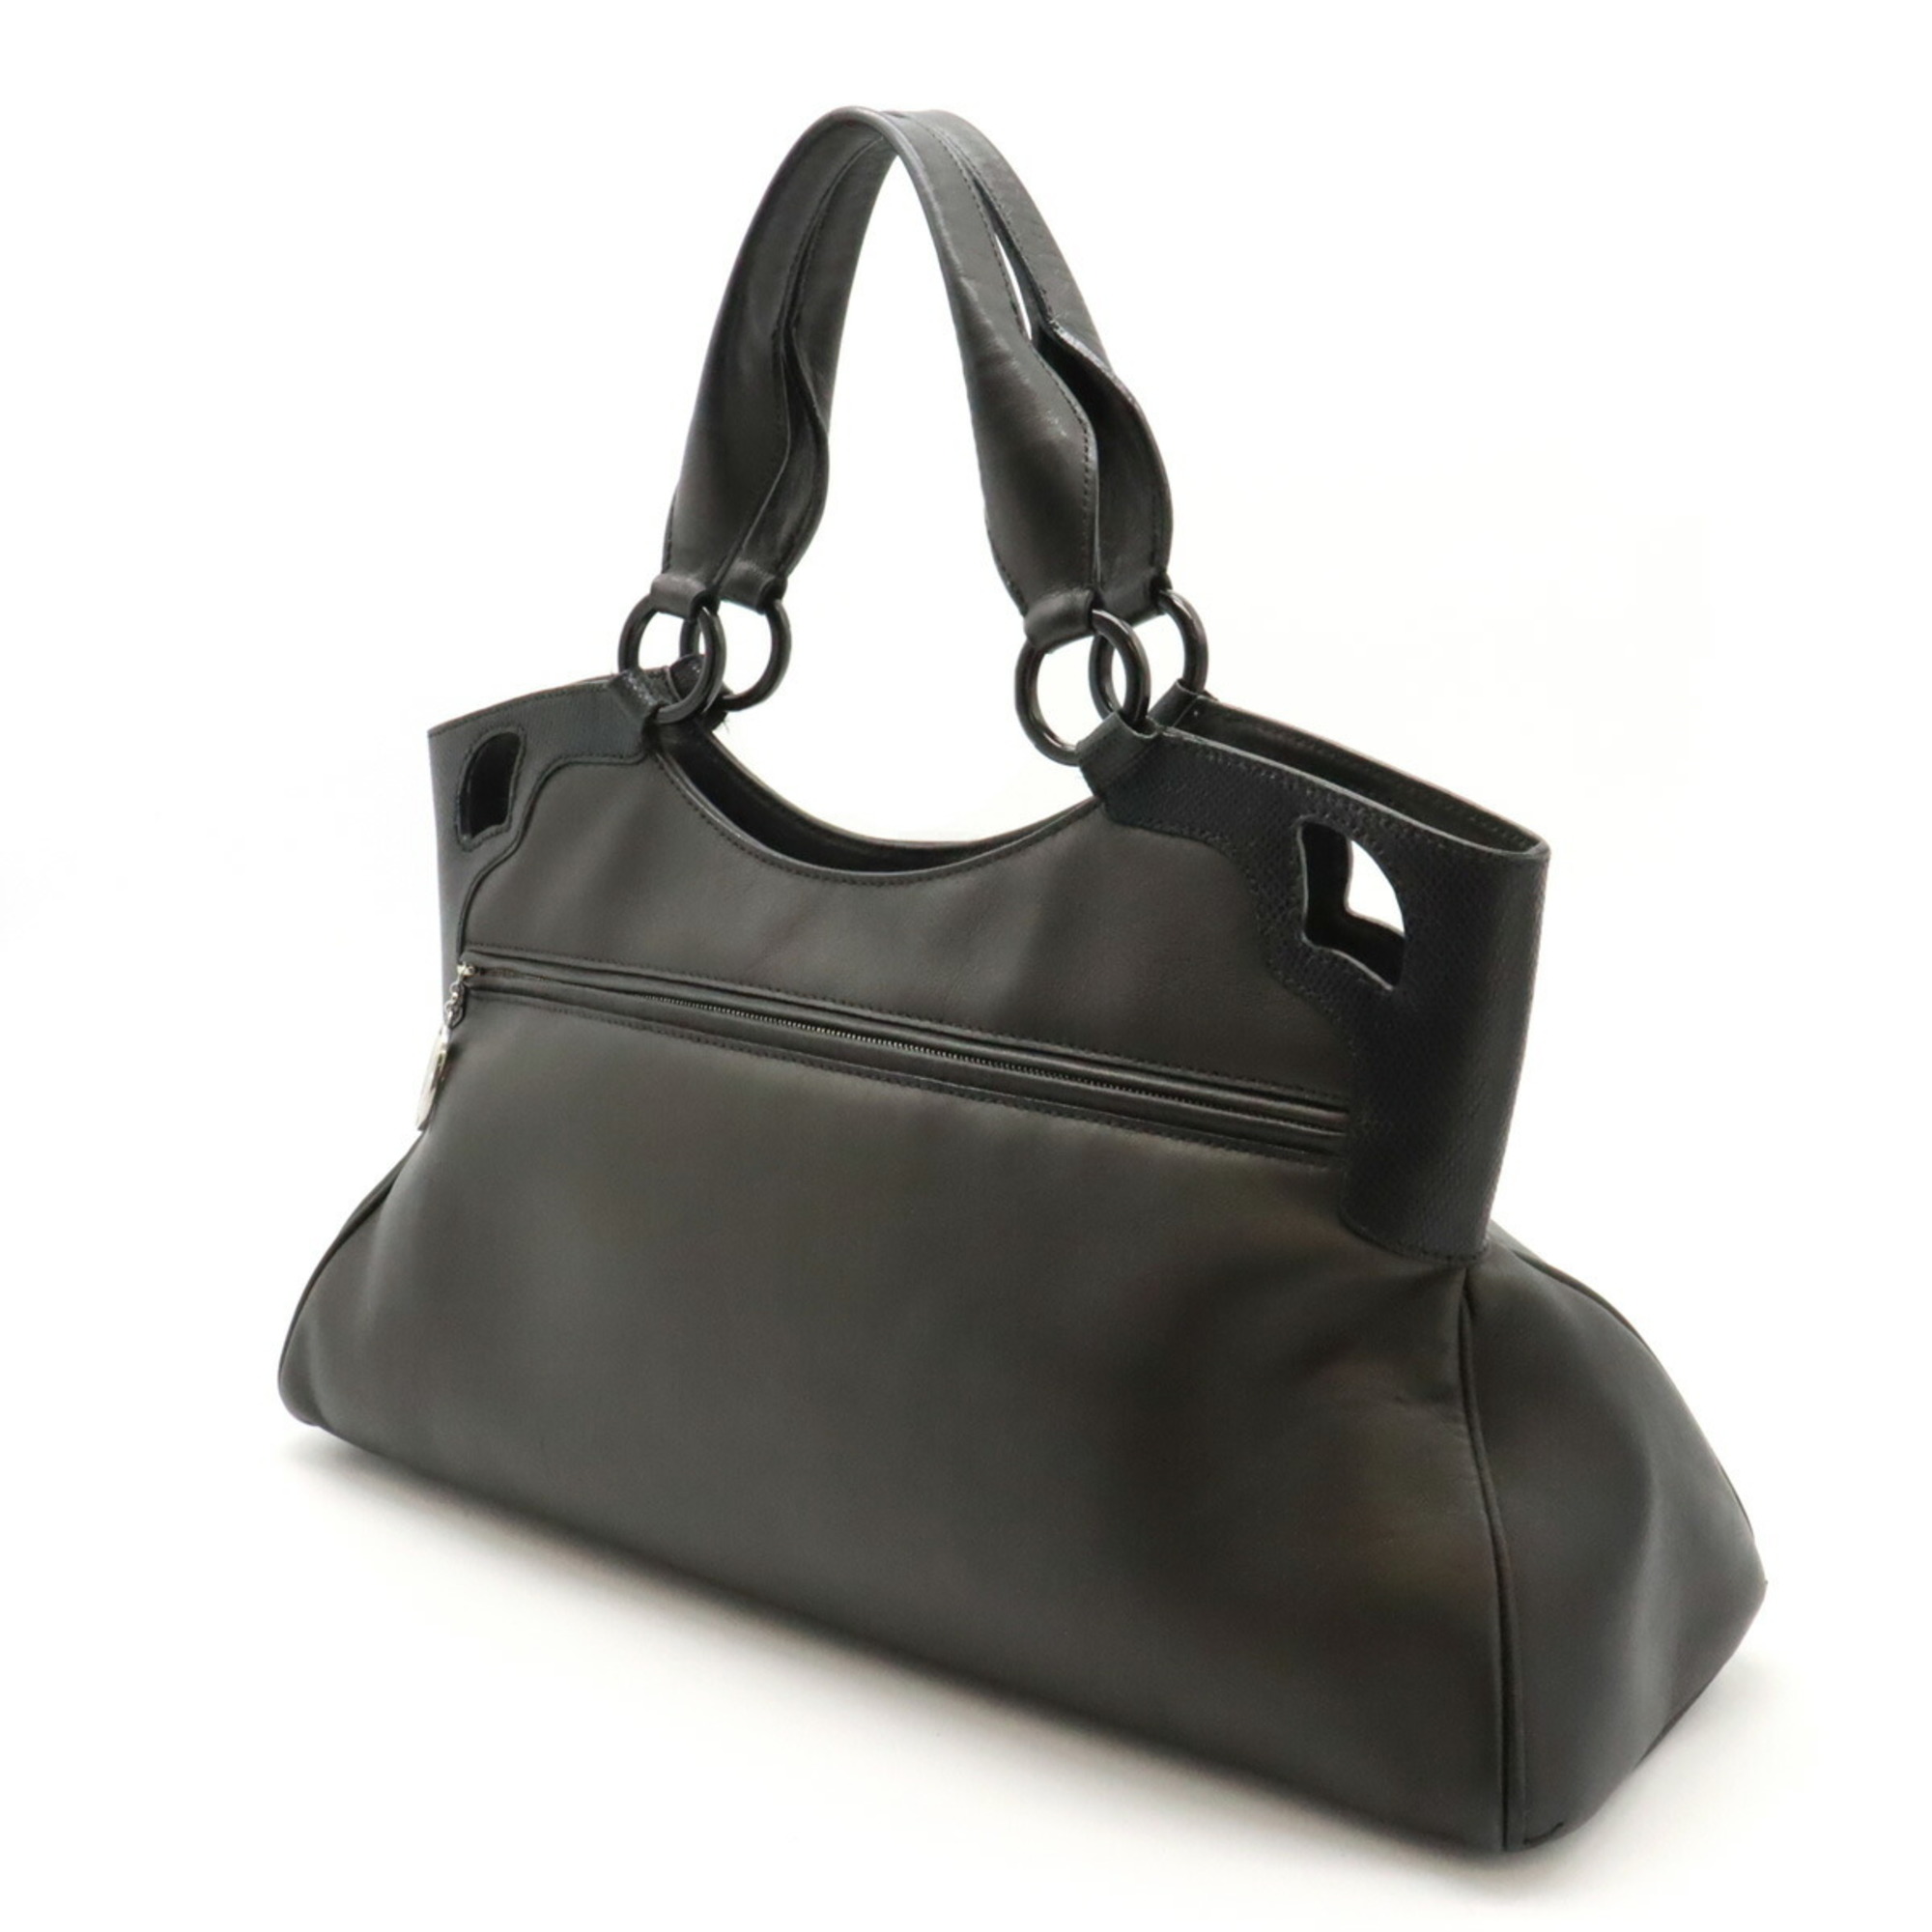 Cartier Marcello de handbag tote bag in embossed calf leather, black